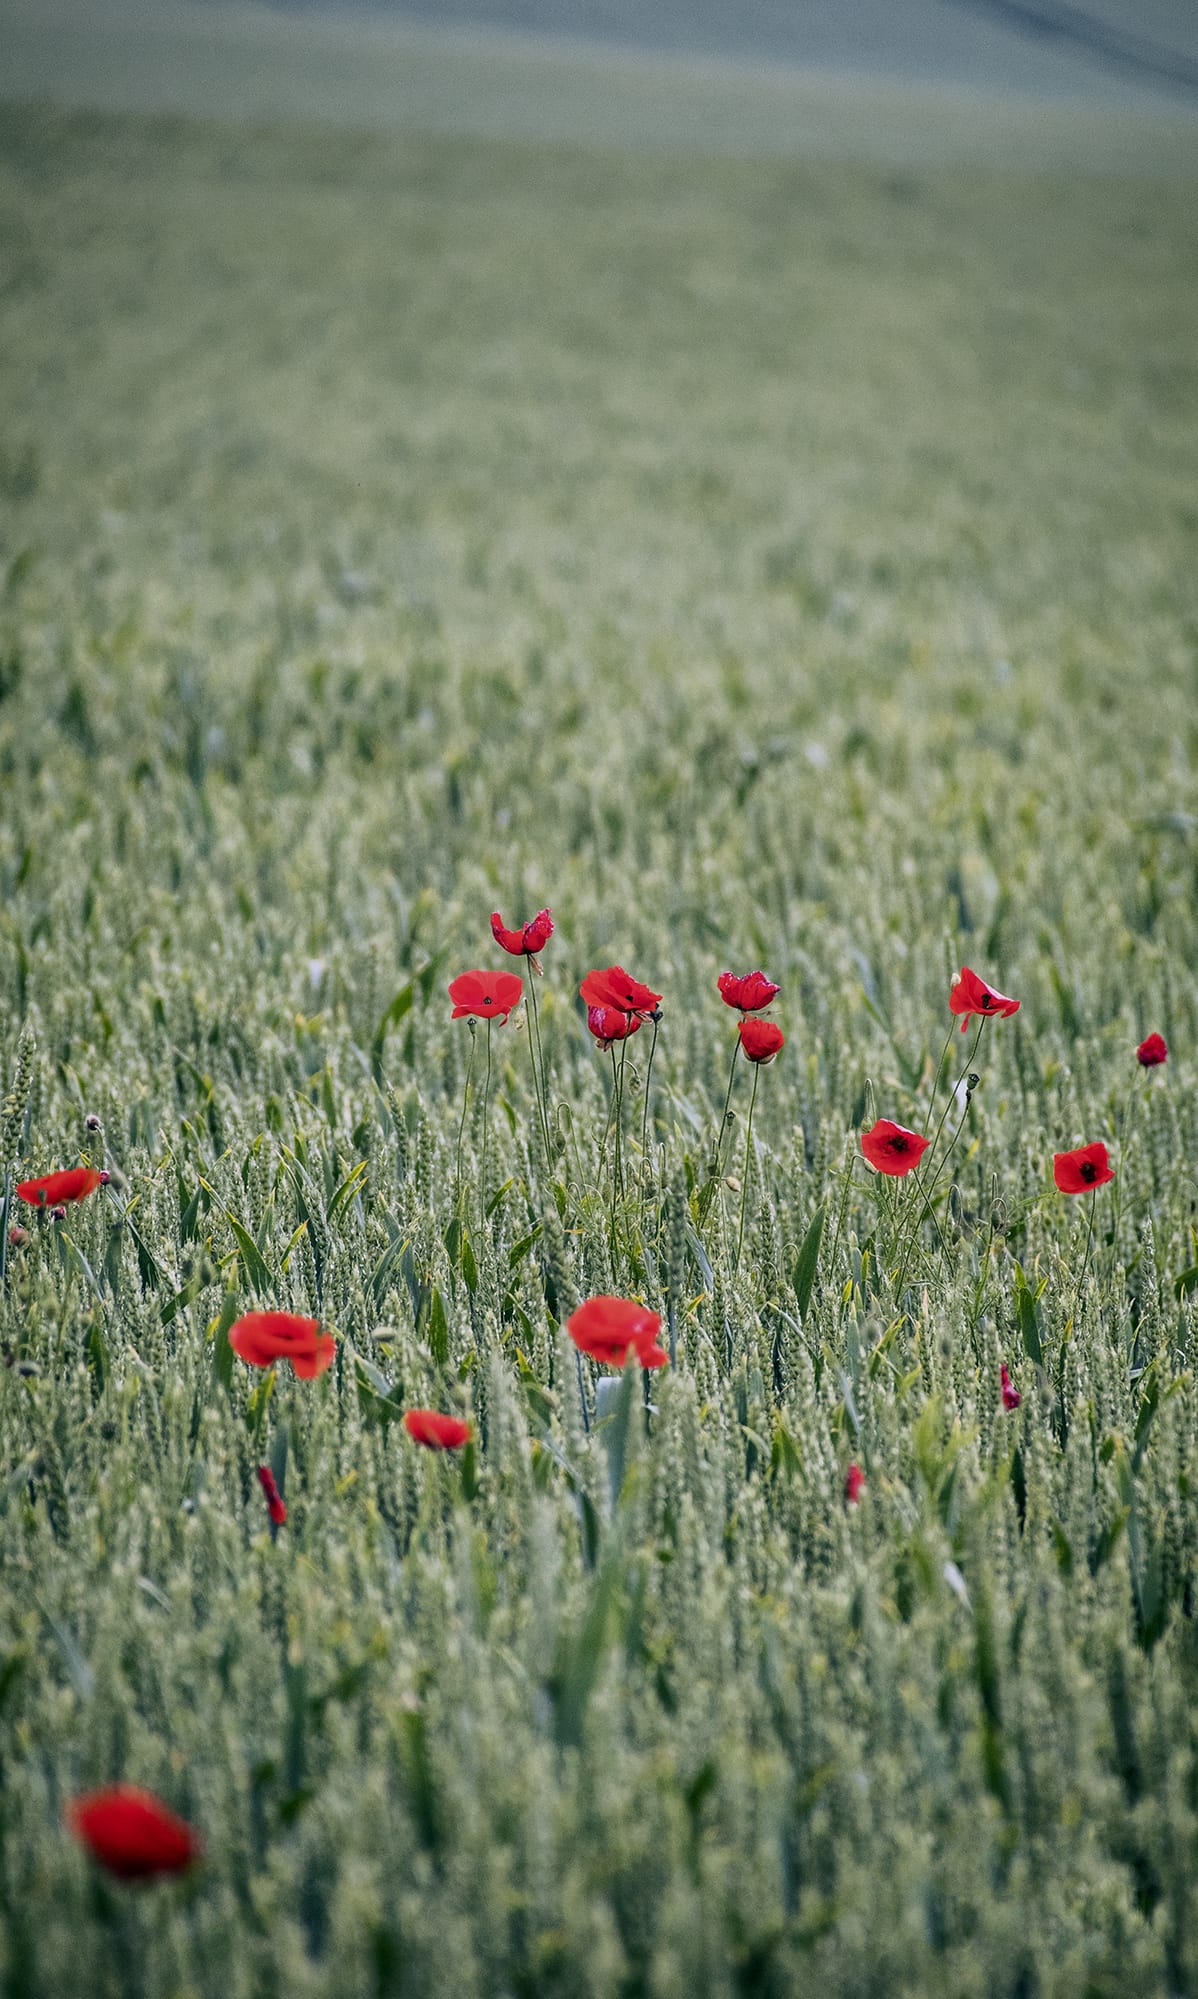 Bunga opium poppy merah tua di ladang gandum hijau